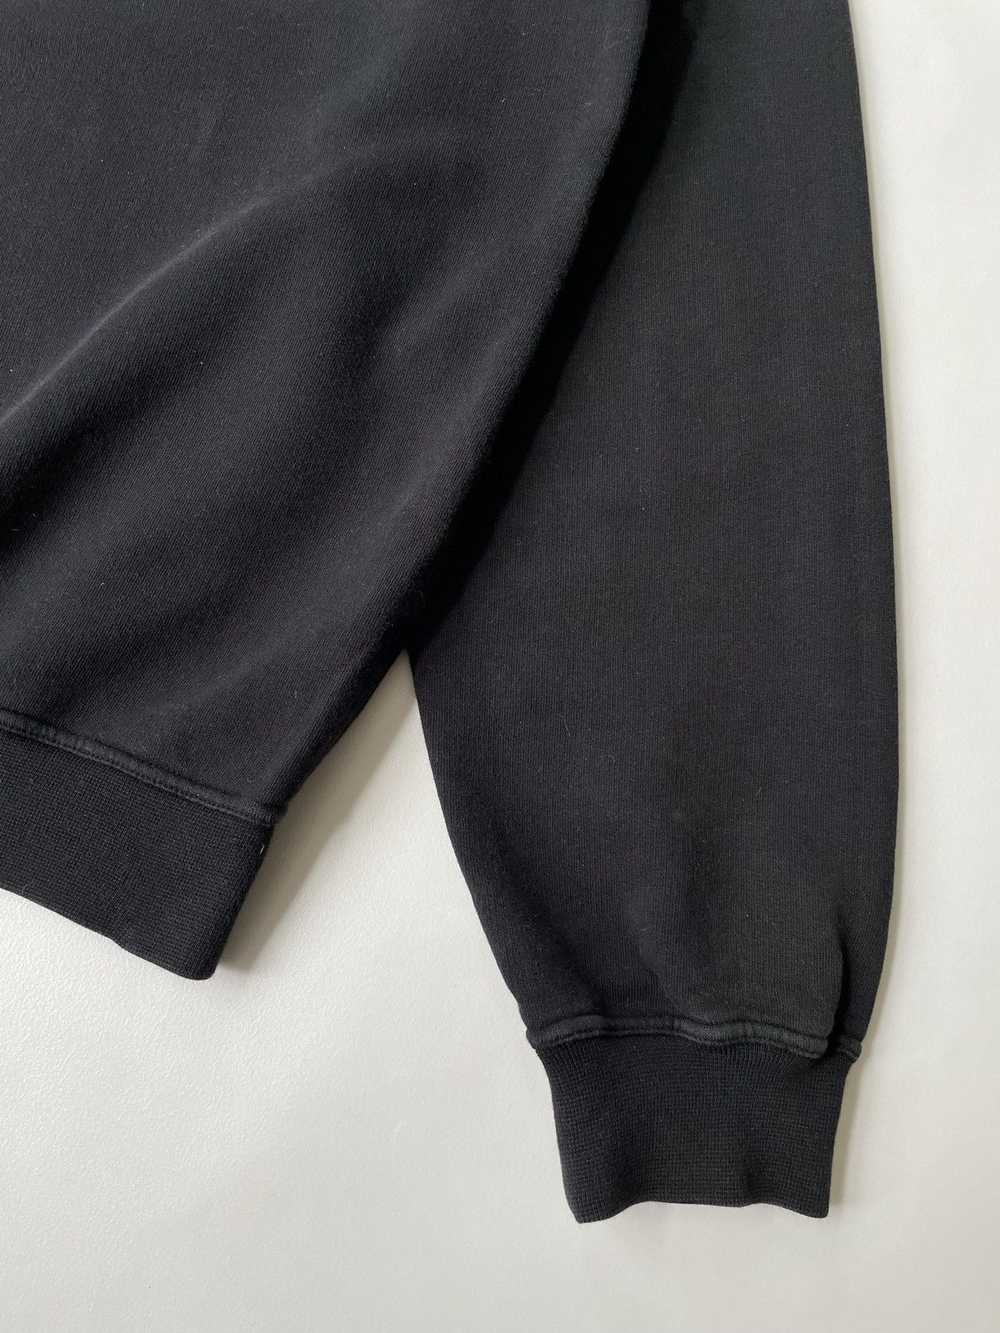 Haider Ackermann Oversized Black Cotton Sweatshirt - image 7